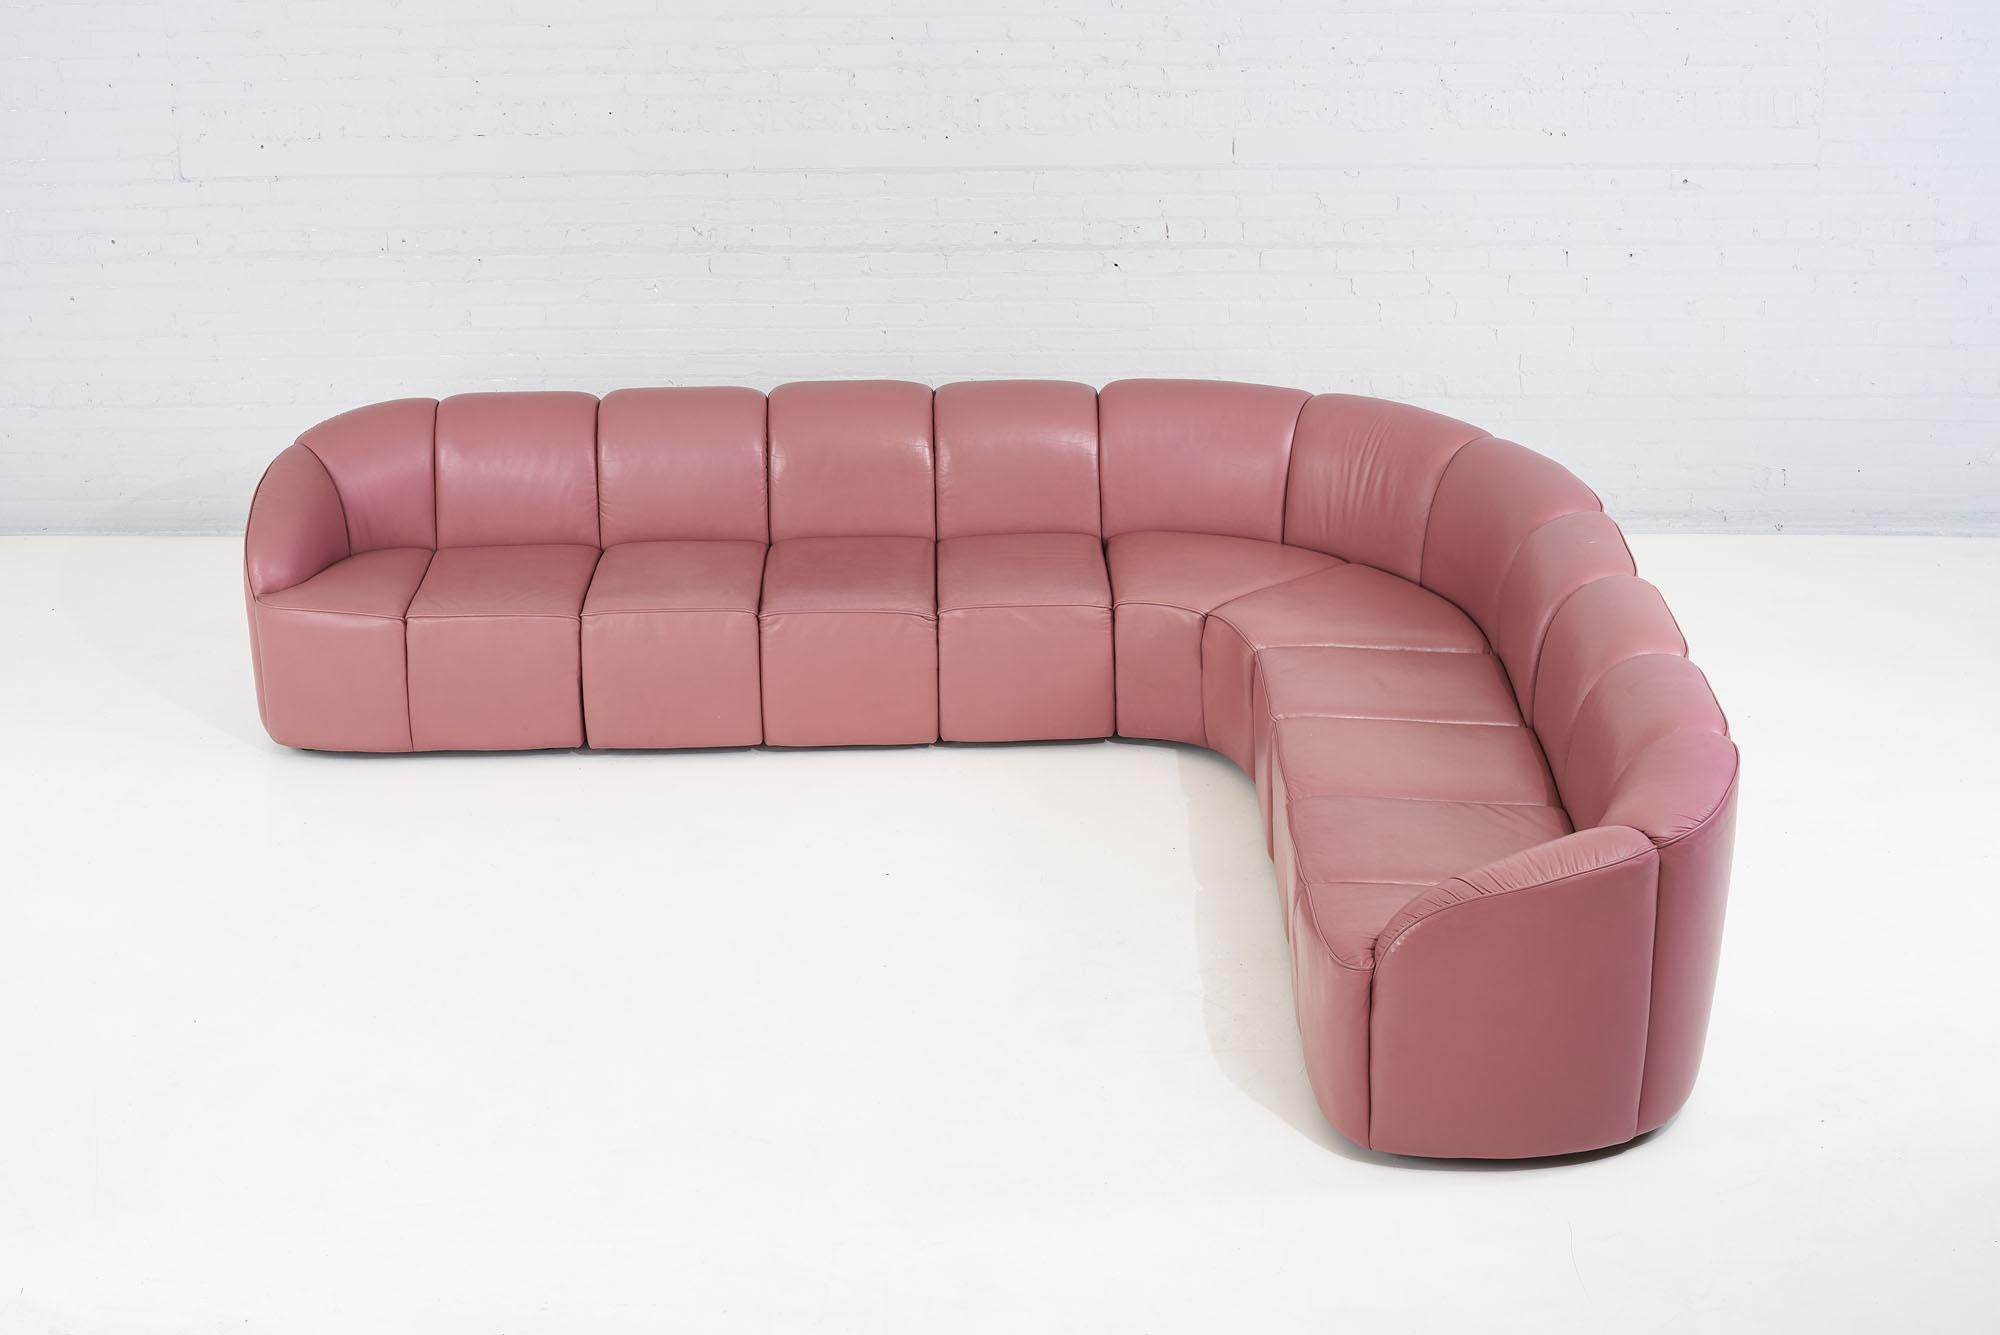 Brayton International pink leather 8 piece modular/sectional sofa, 1980. Original